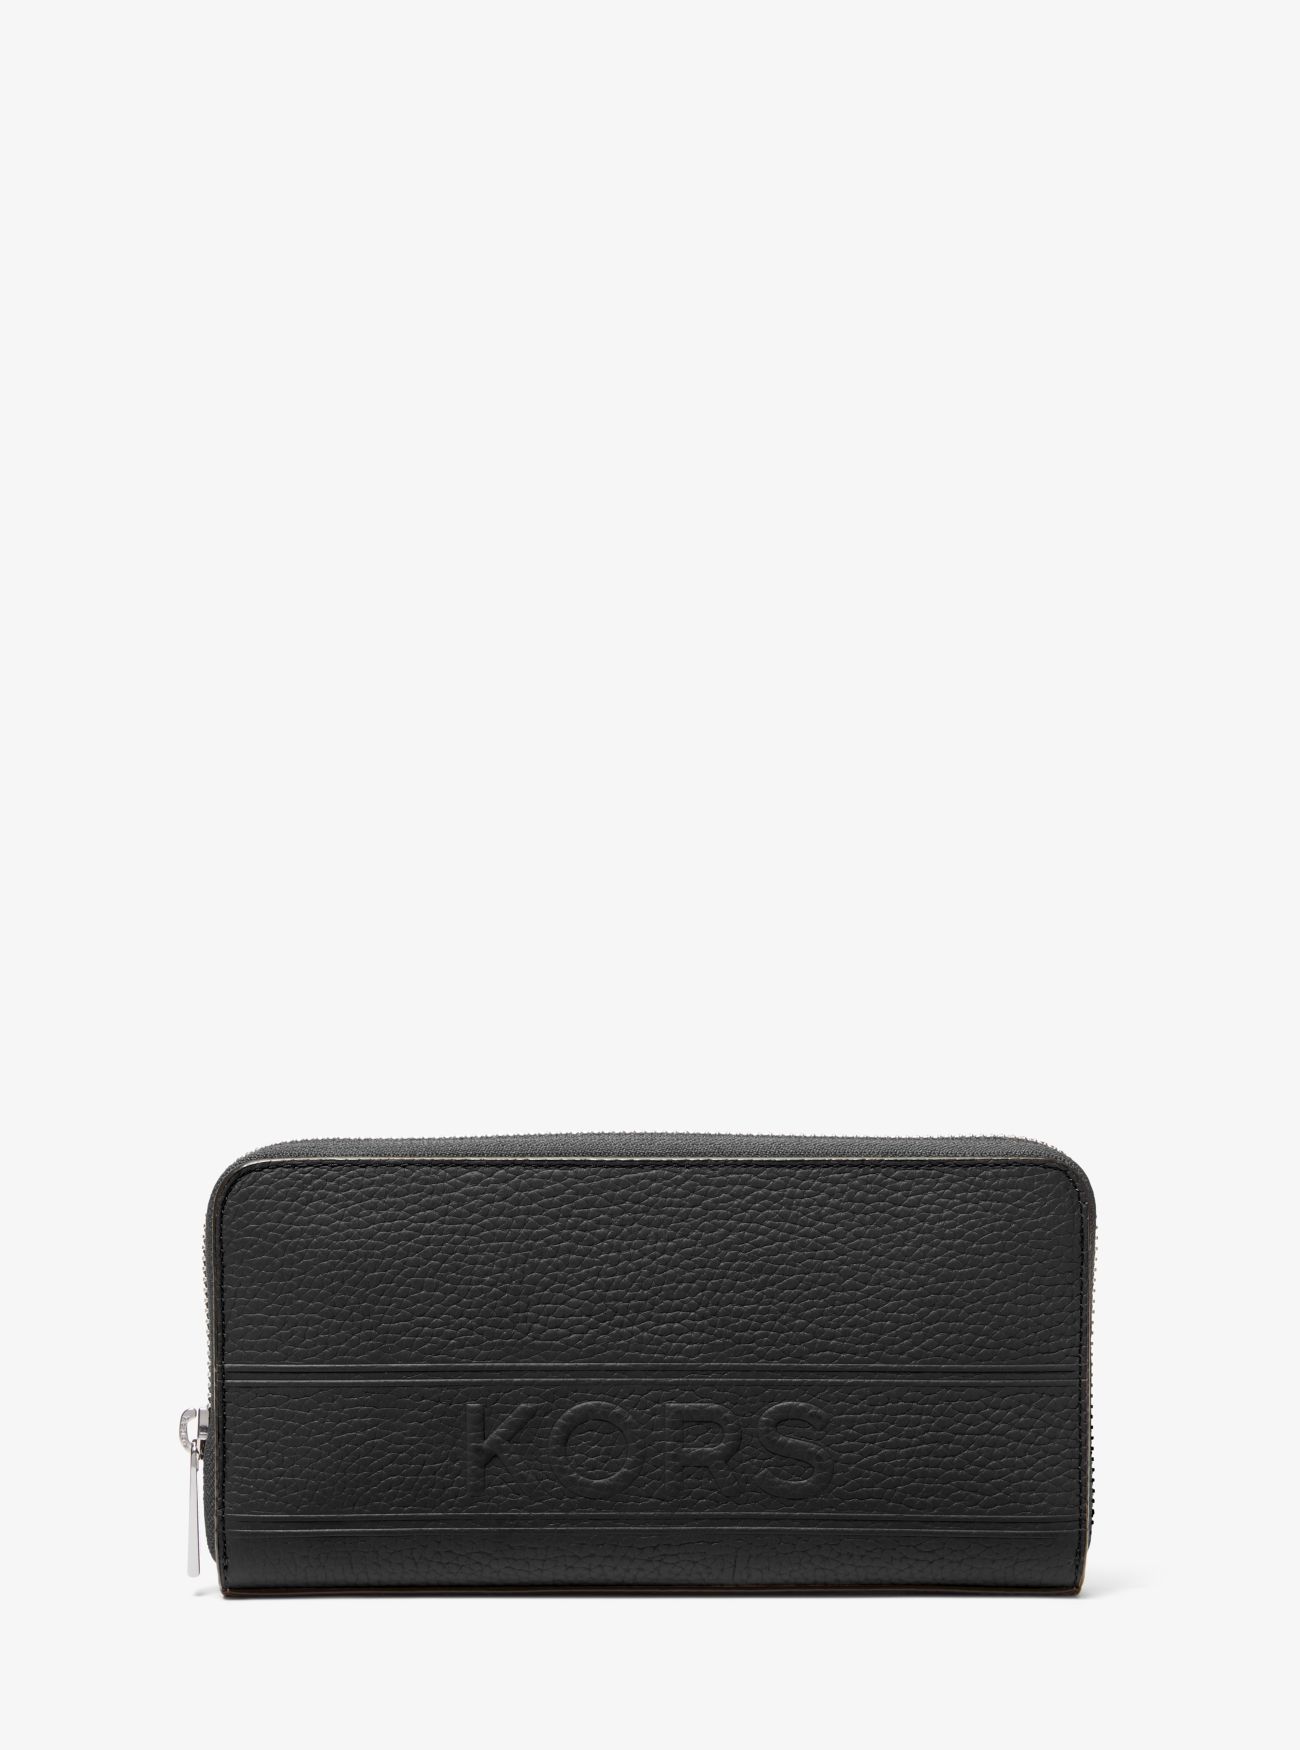 MK Hudson Pebbled Leather Zip-Around Wallet - Black - Michael Kors